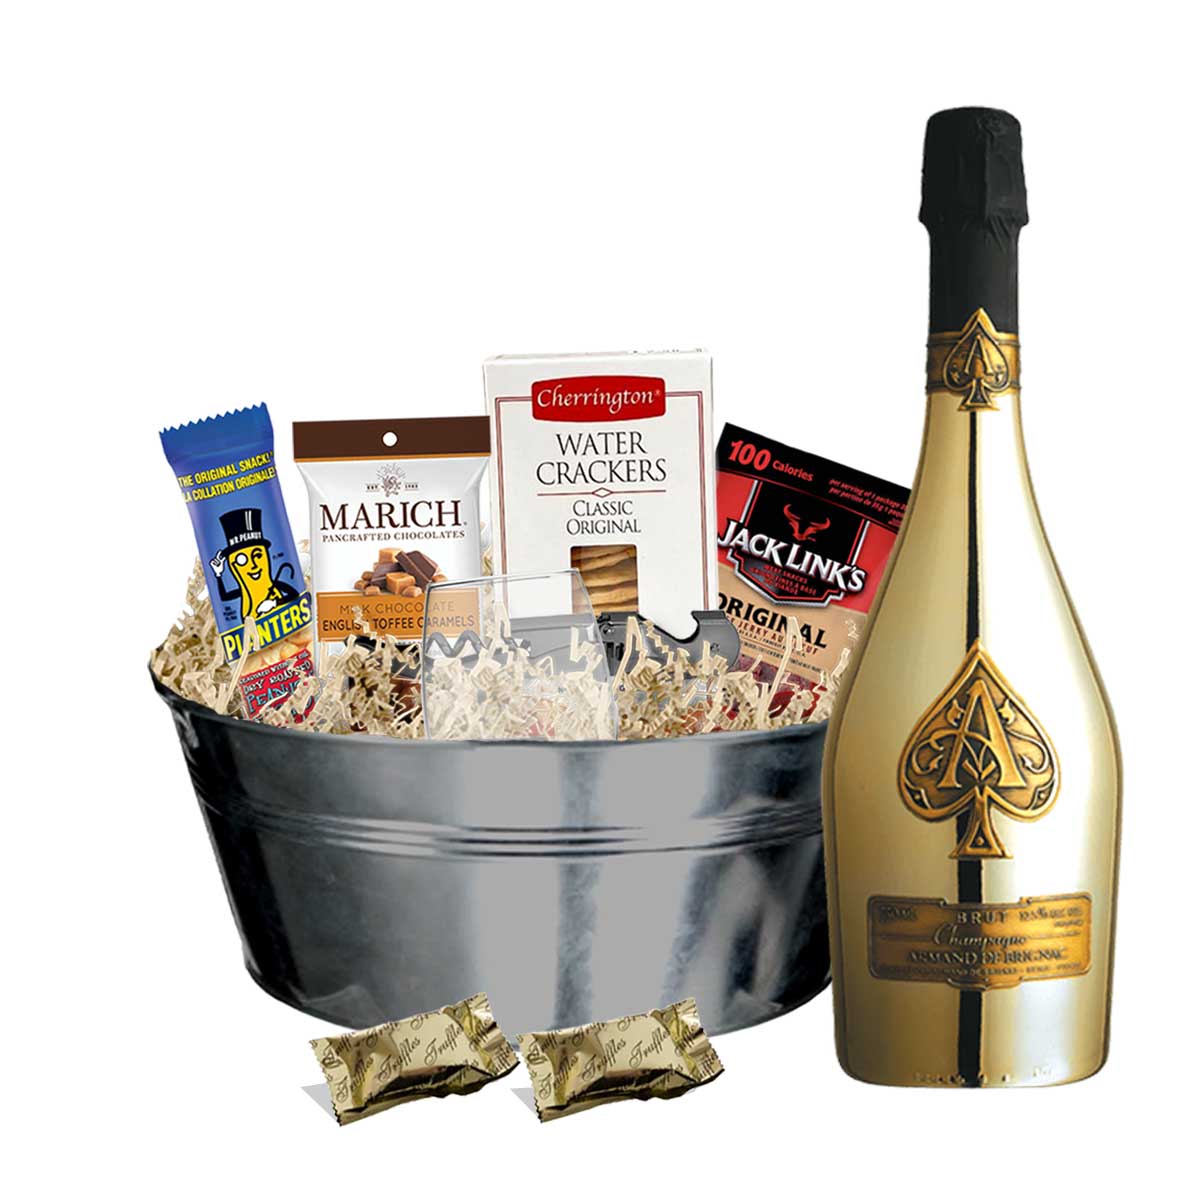 TAG Liquor Stores BC - Armand de Brignac Ace of Spades Brut Champagne 750ml Gift Basket